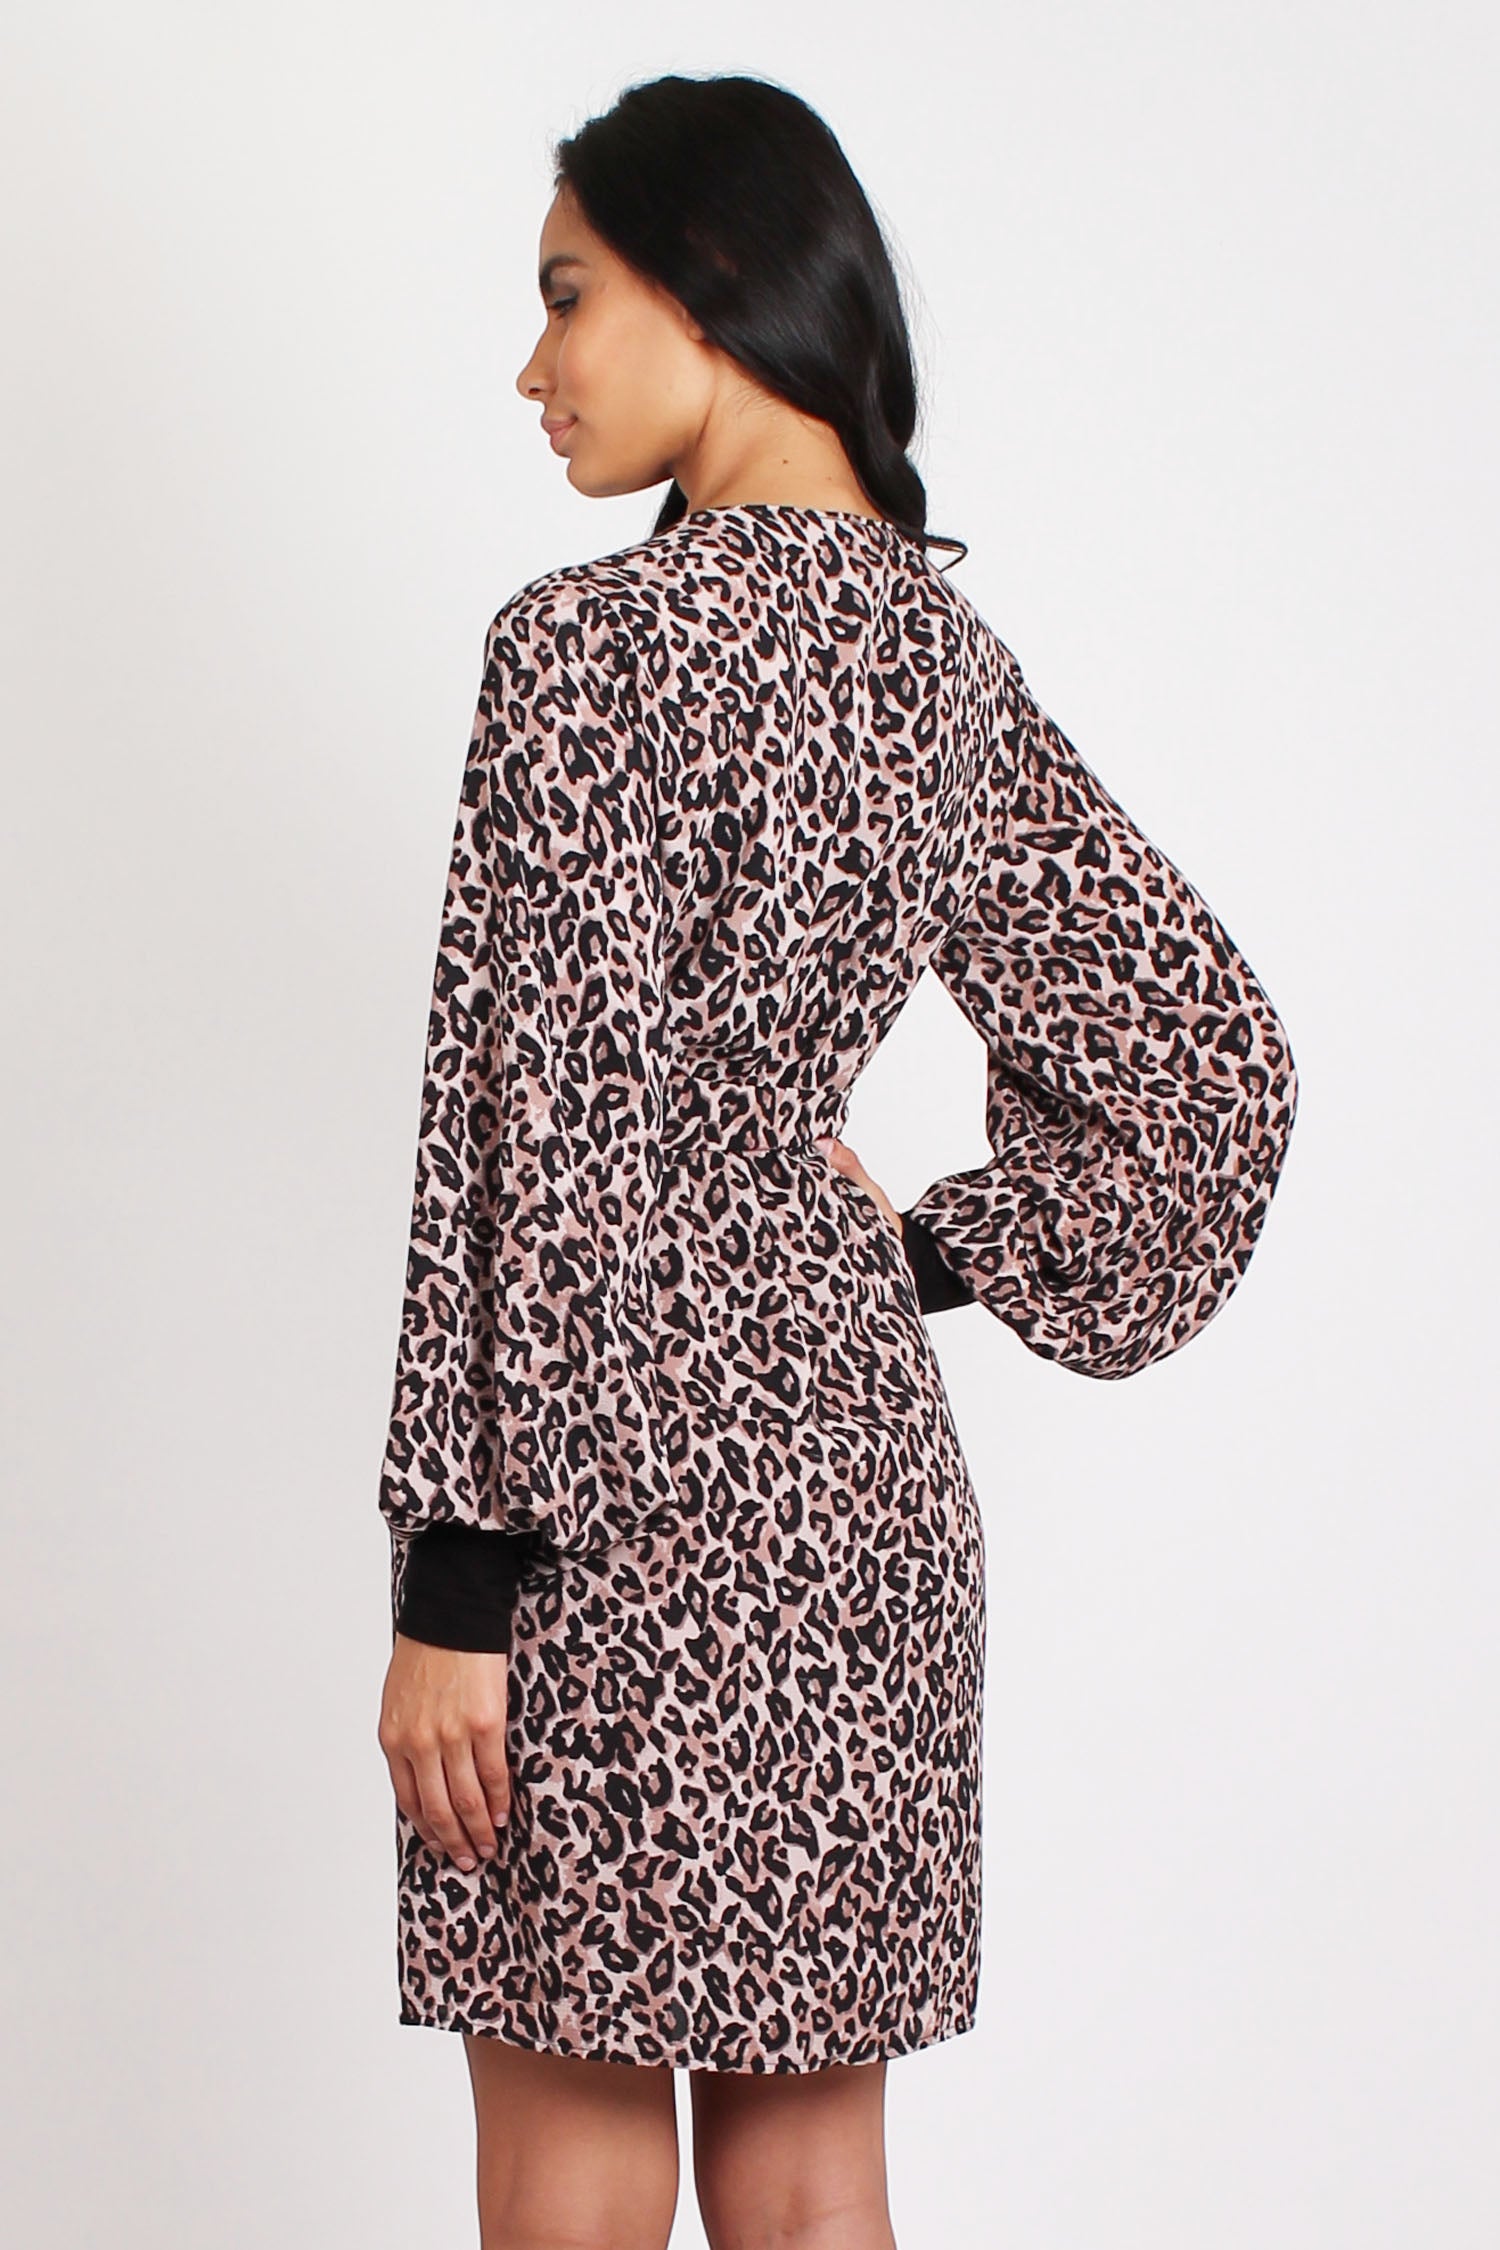 Leopard Print Wrap Dress with Balloon Sleeve